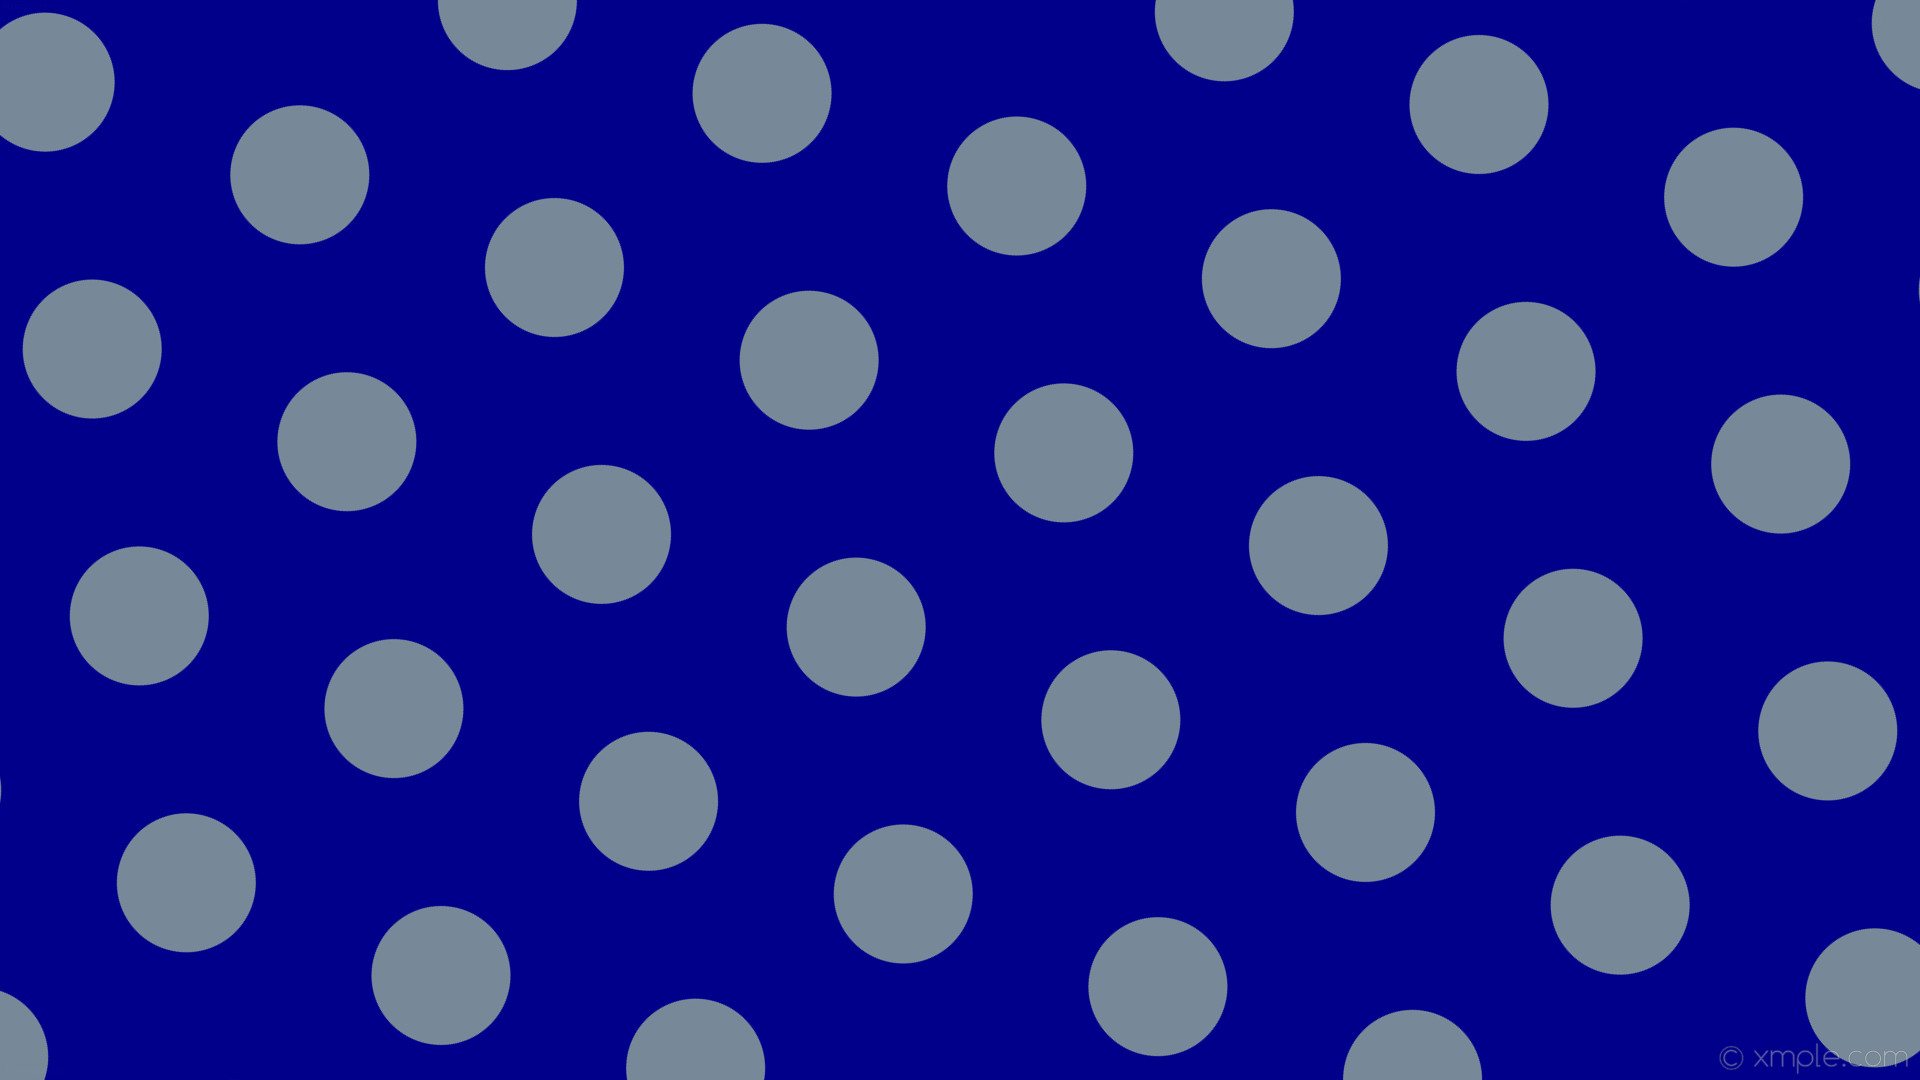 1920x1080 wallpaper grey hexagon blue polka dots dark blue light slate gray #00008b  #778899 diagonal